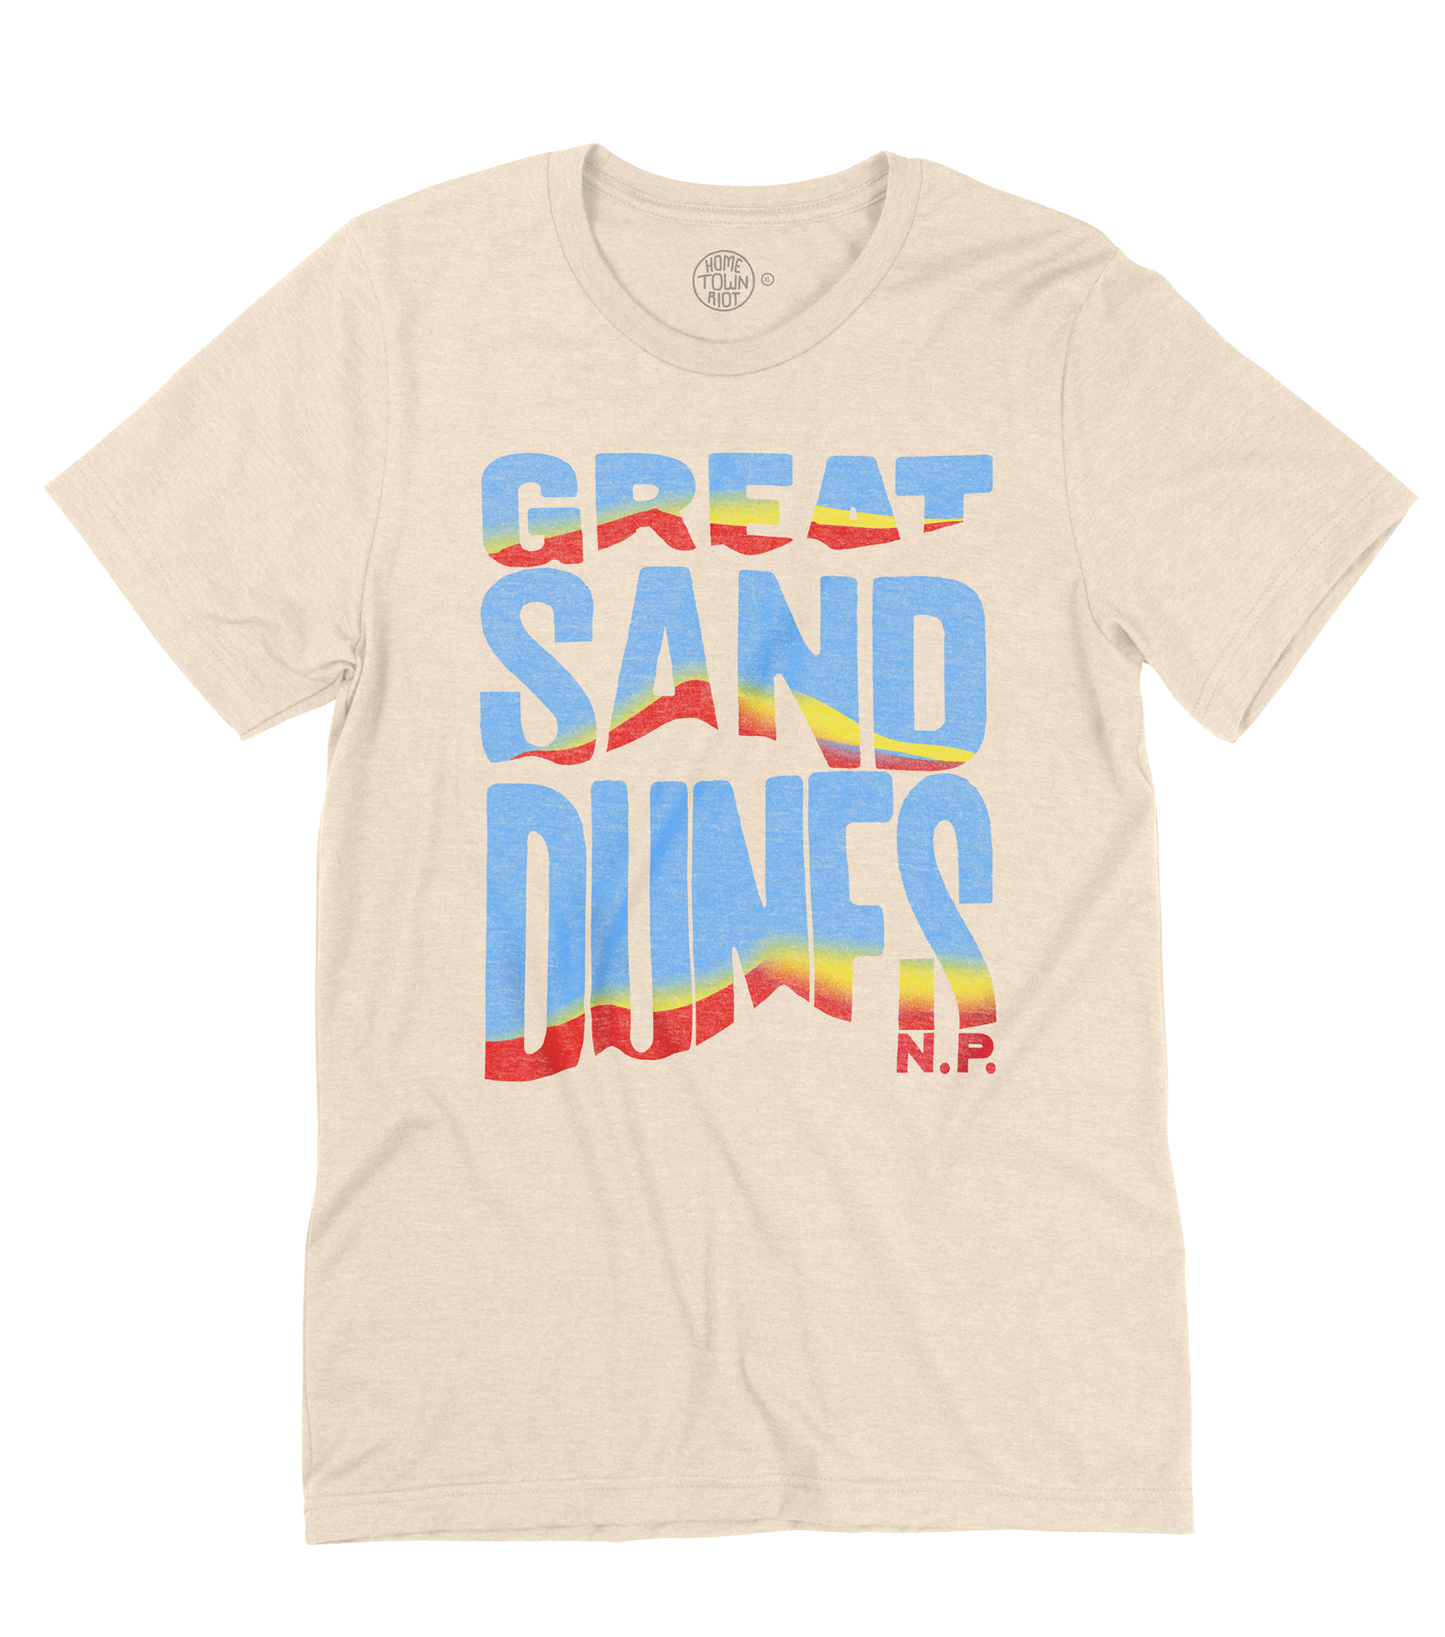 Great Sand Dunes National Park Shirt